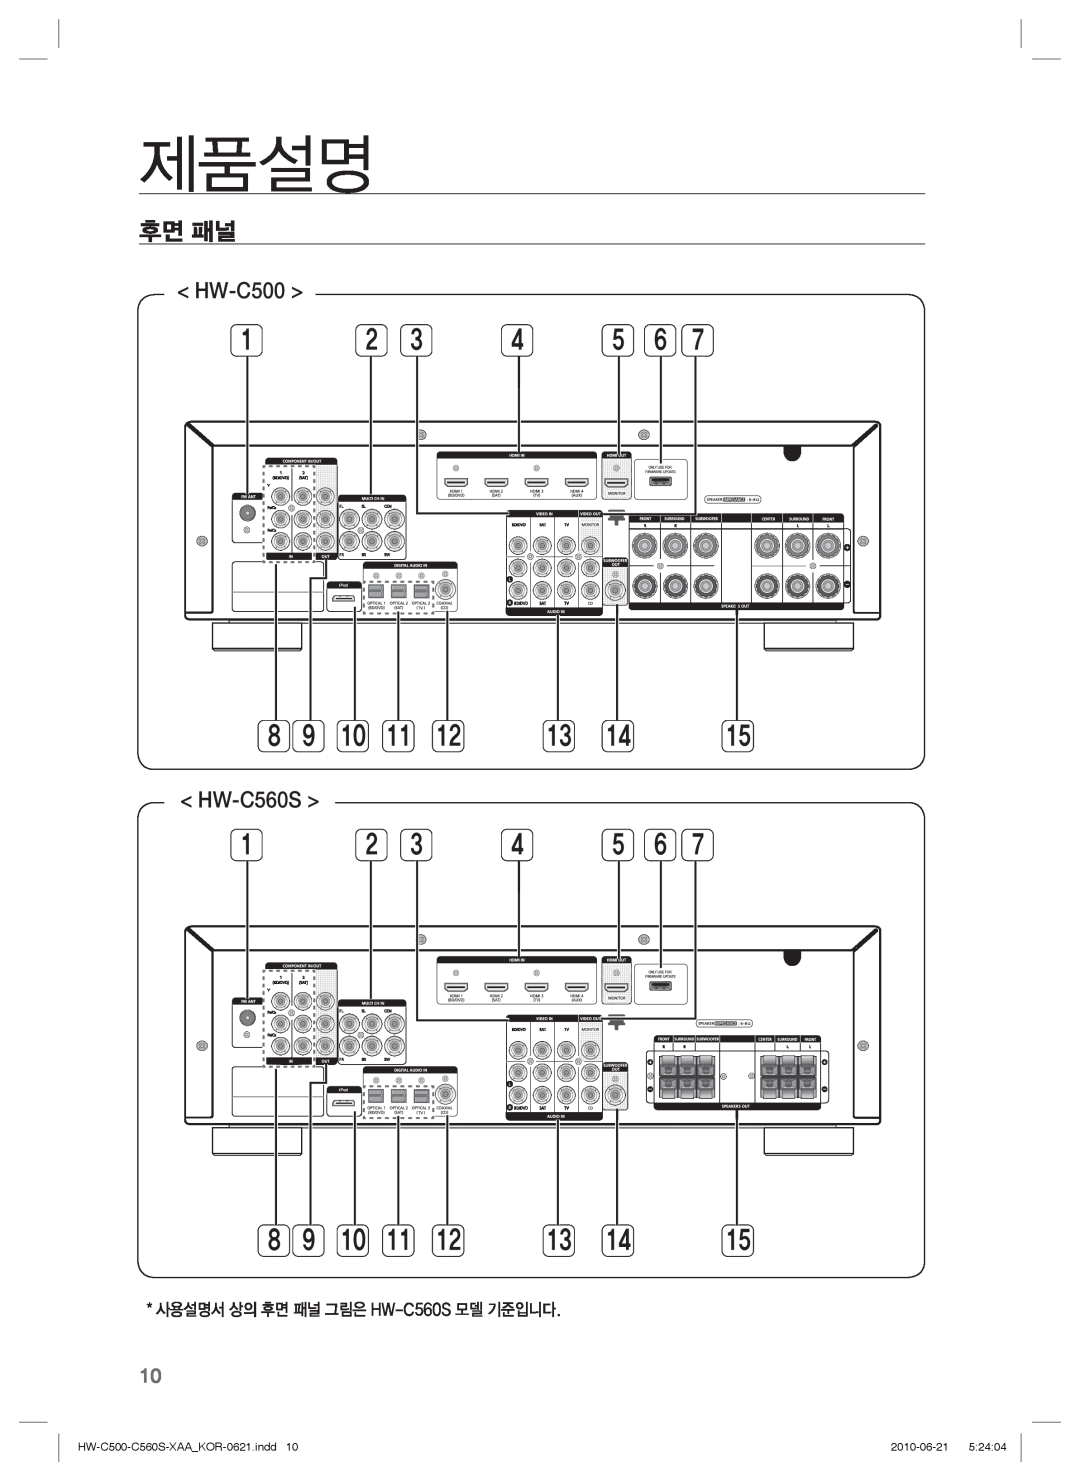 Samsung C560S manual 후면 패널, HW-C500, 제품설명 